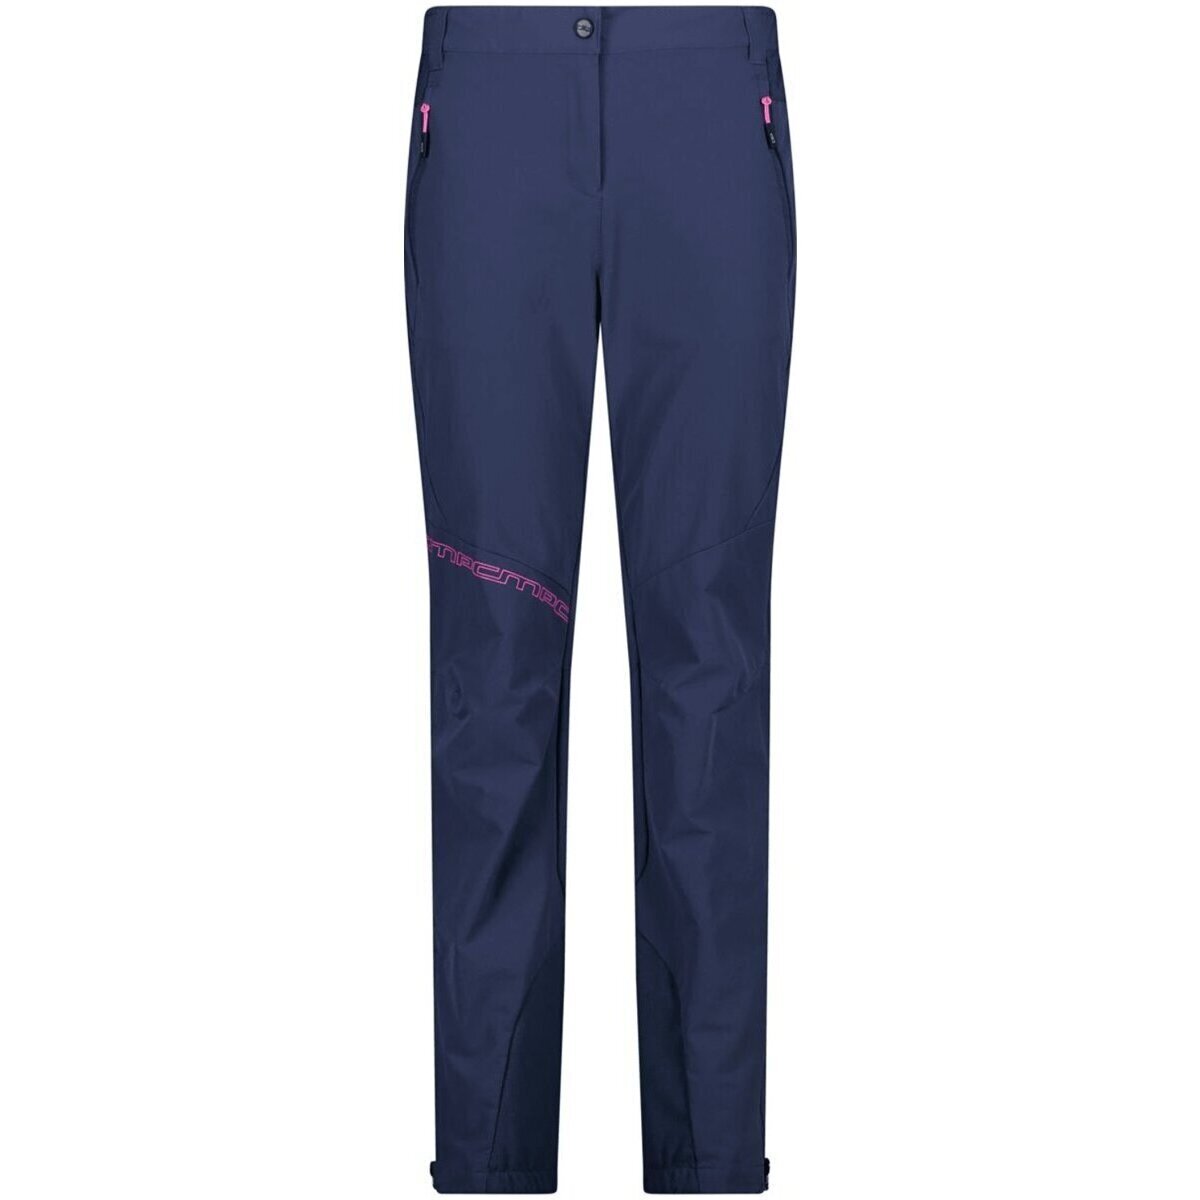 Kleidung Jungen Shorts / Bermudas Cmp Sport WOMAN LONG PANT 34T6736/08MR Blau